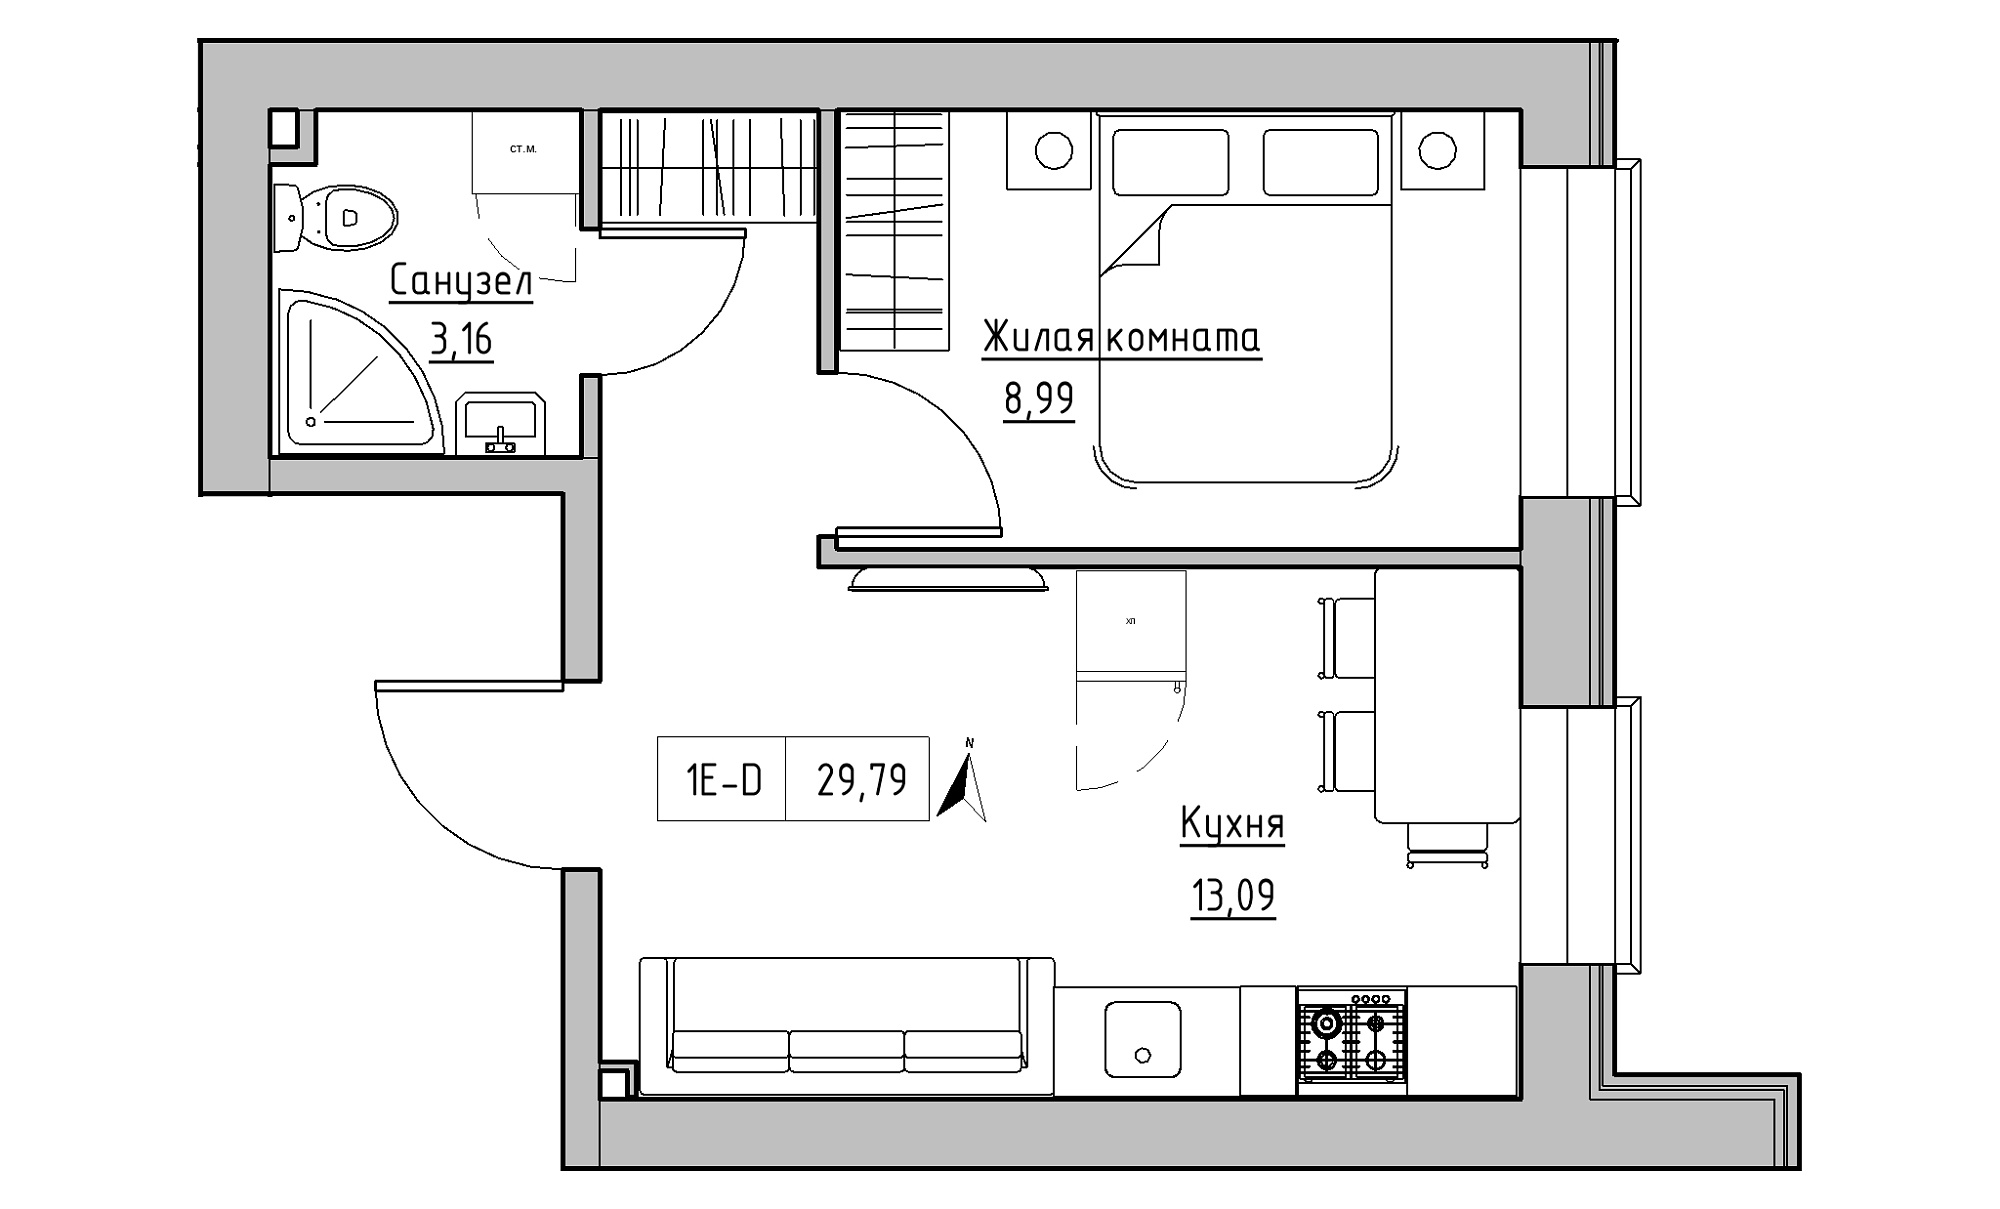 Planning 1-rm flats area 29.79m2, KS-016-01/0013.